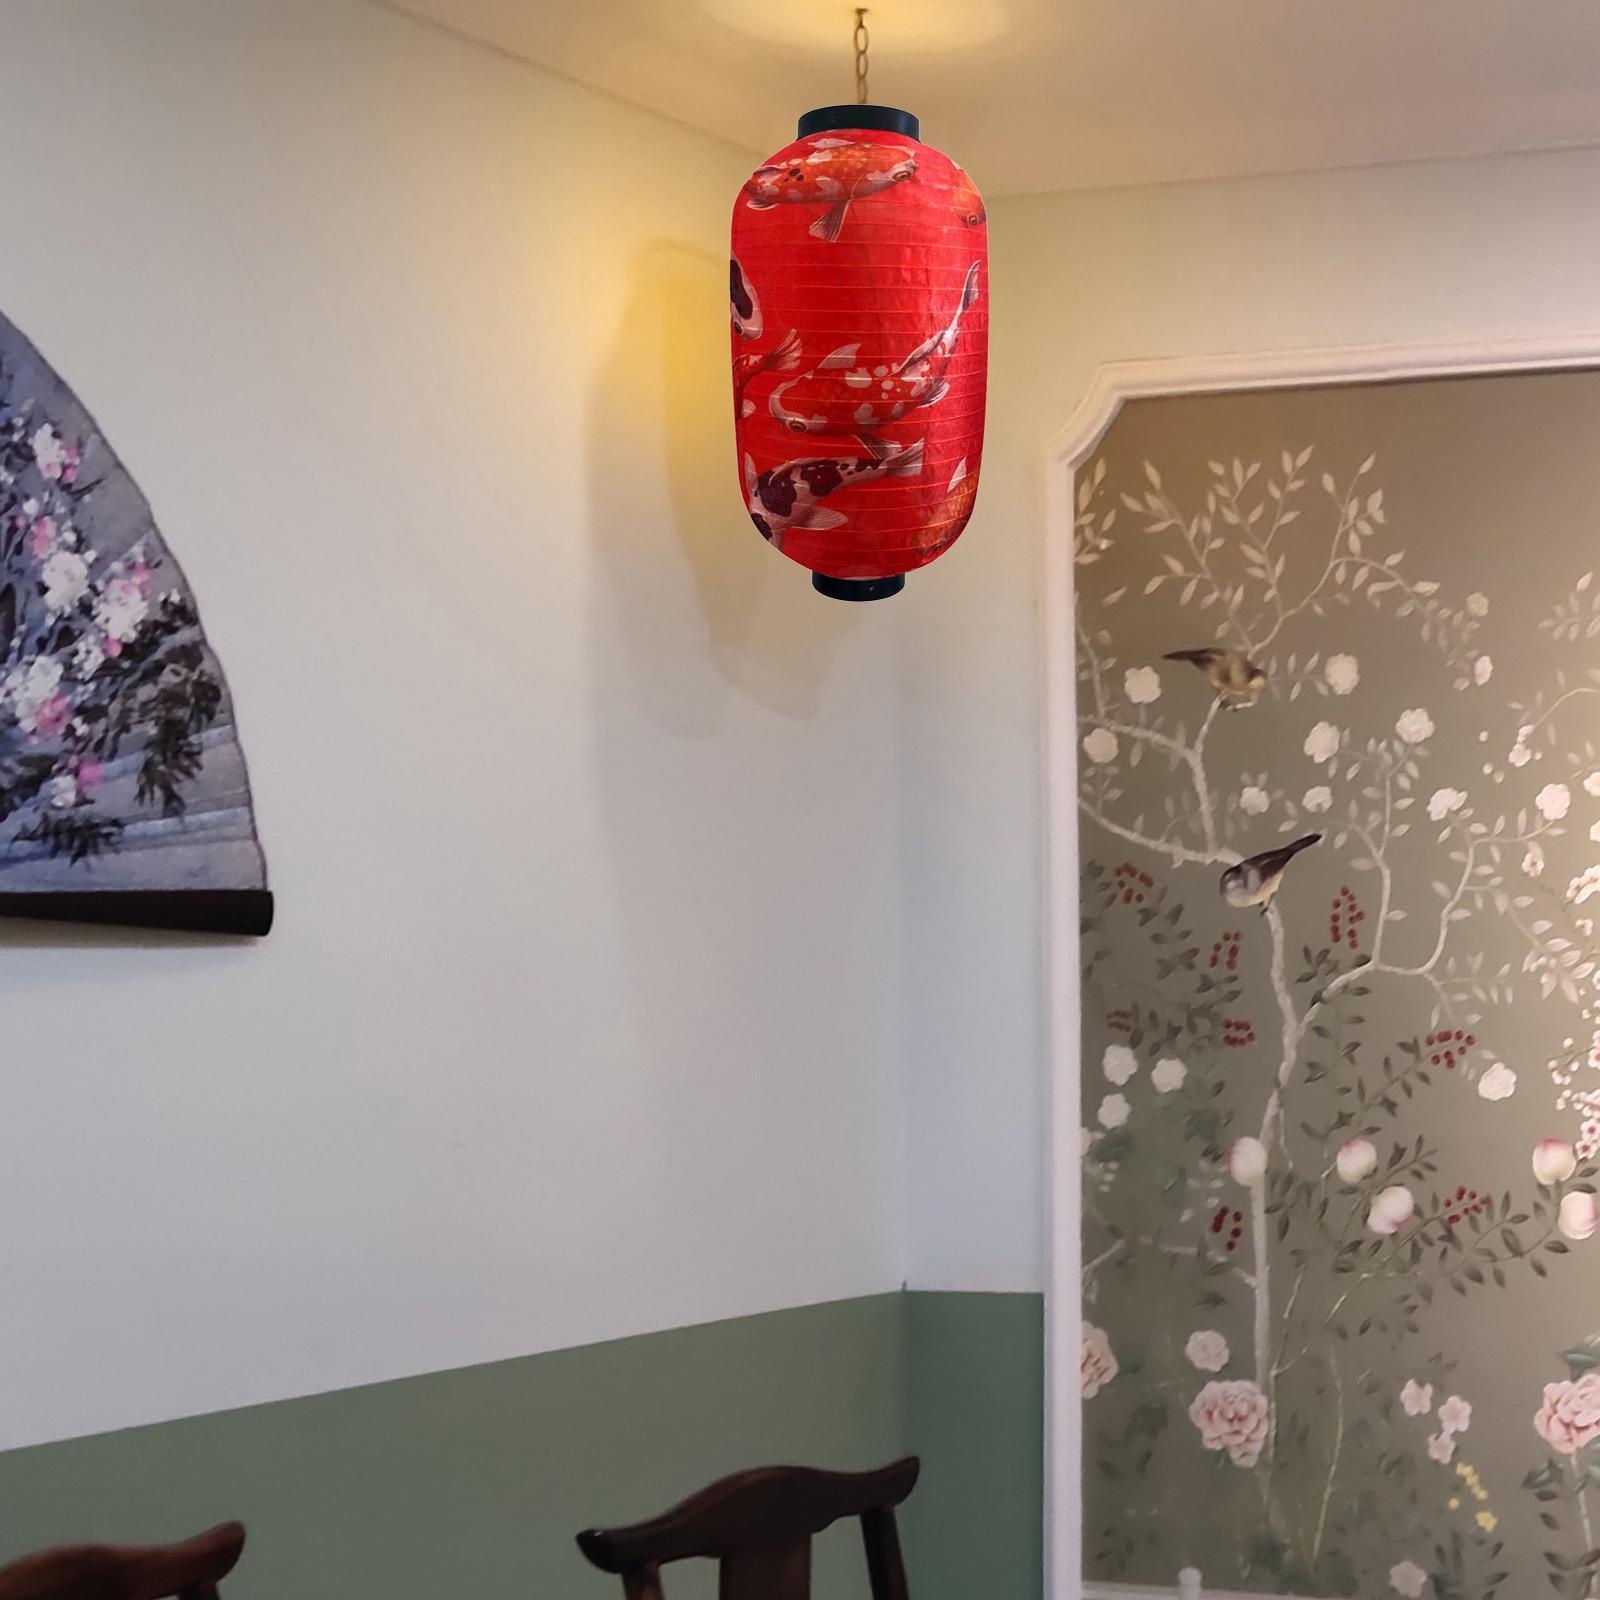 Lzakaya Restaurant Sign Lantern Japanese Bar Decorative Sushi Ramen Decor Red 25x45cm